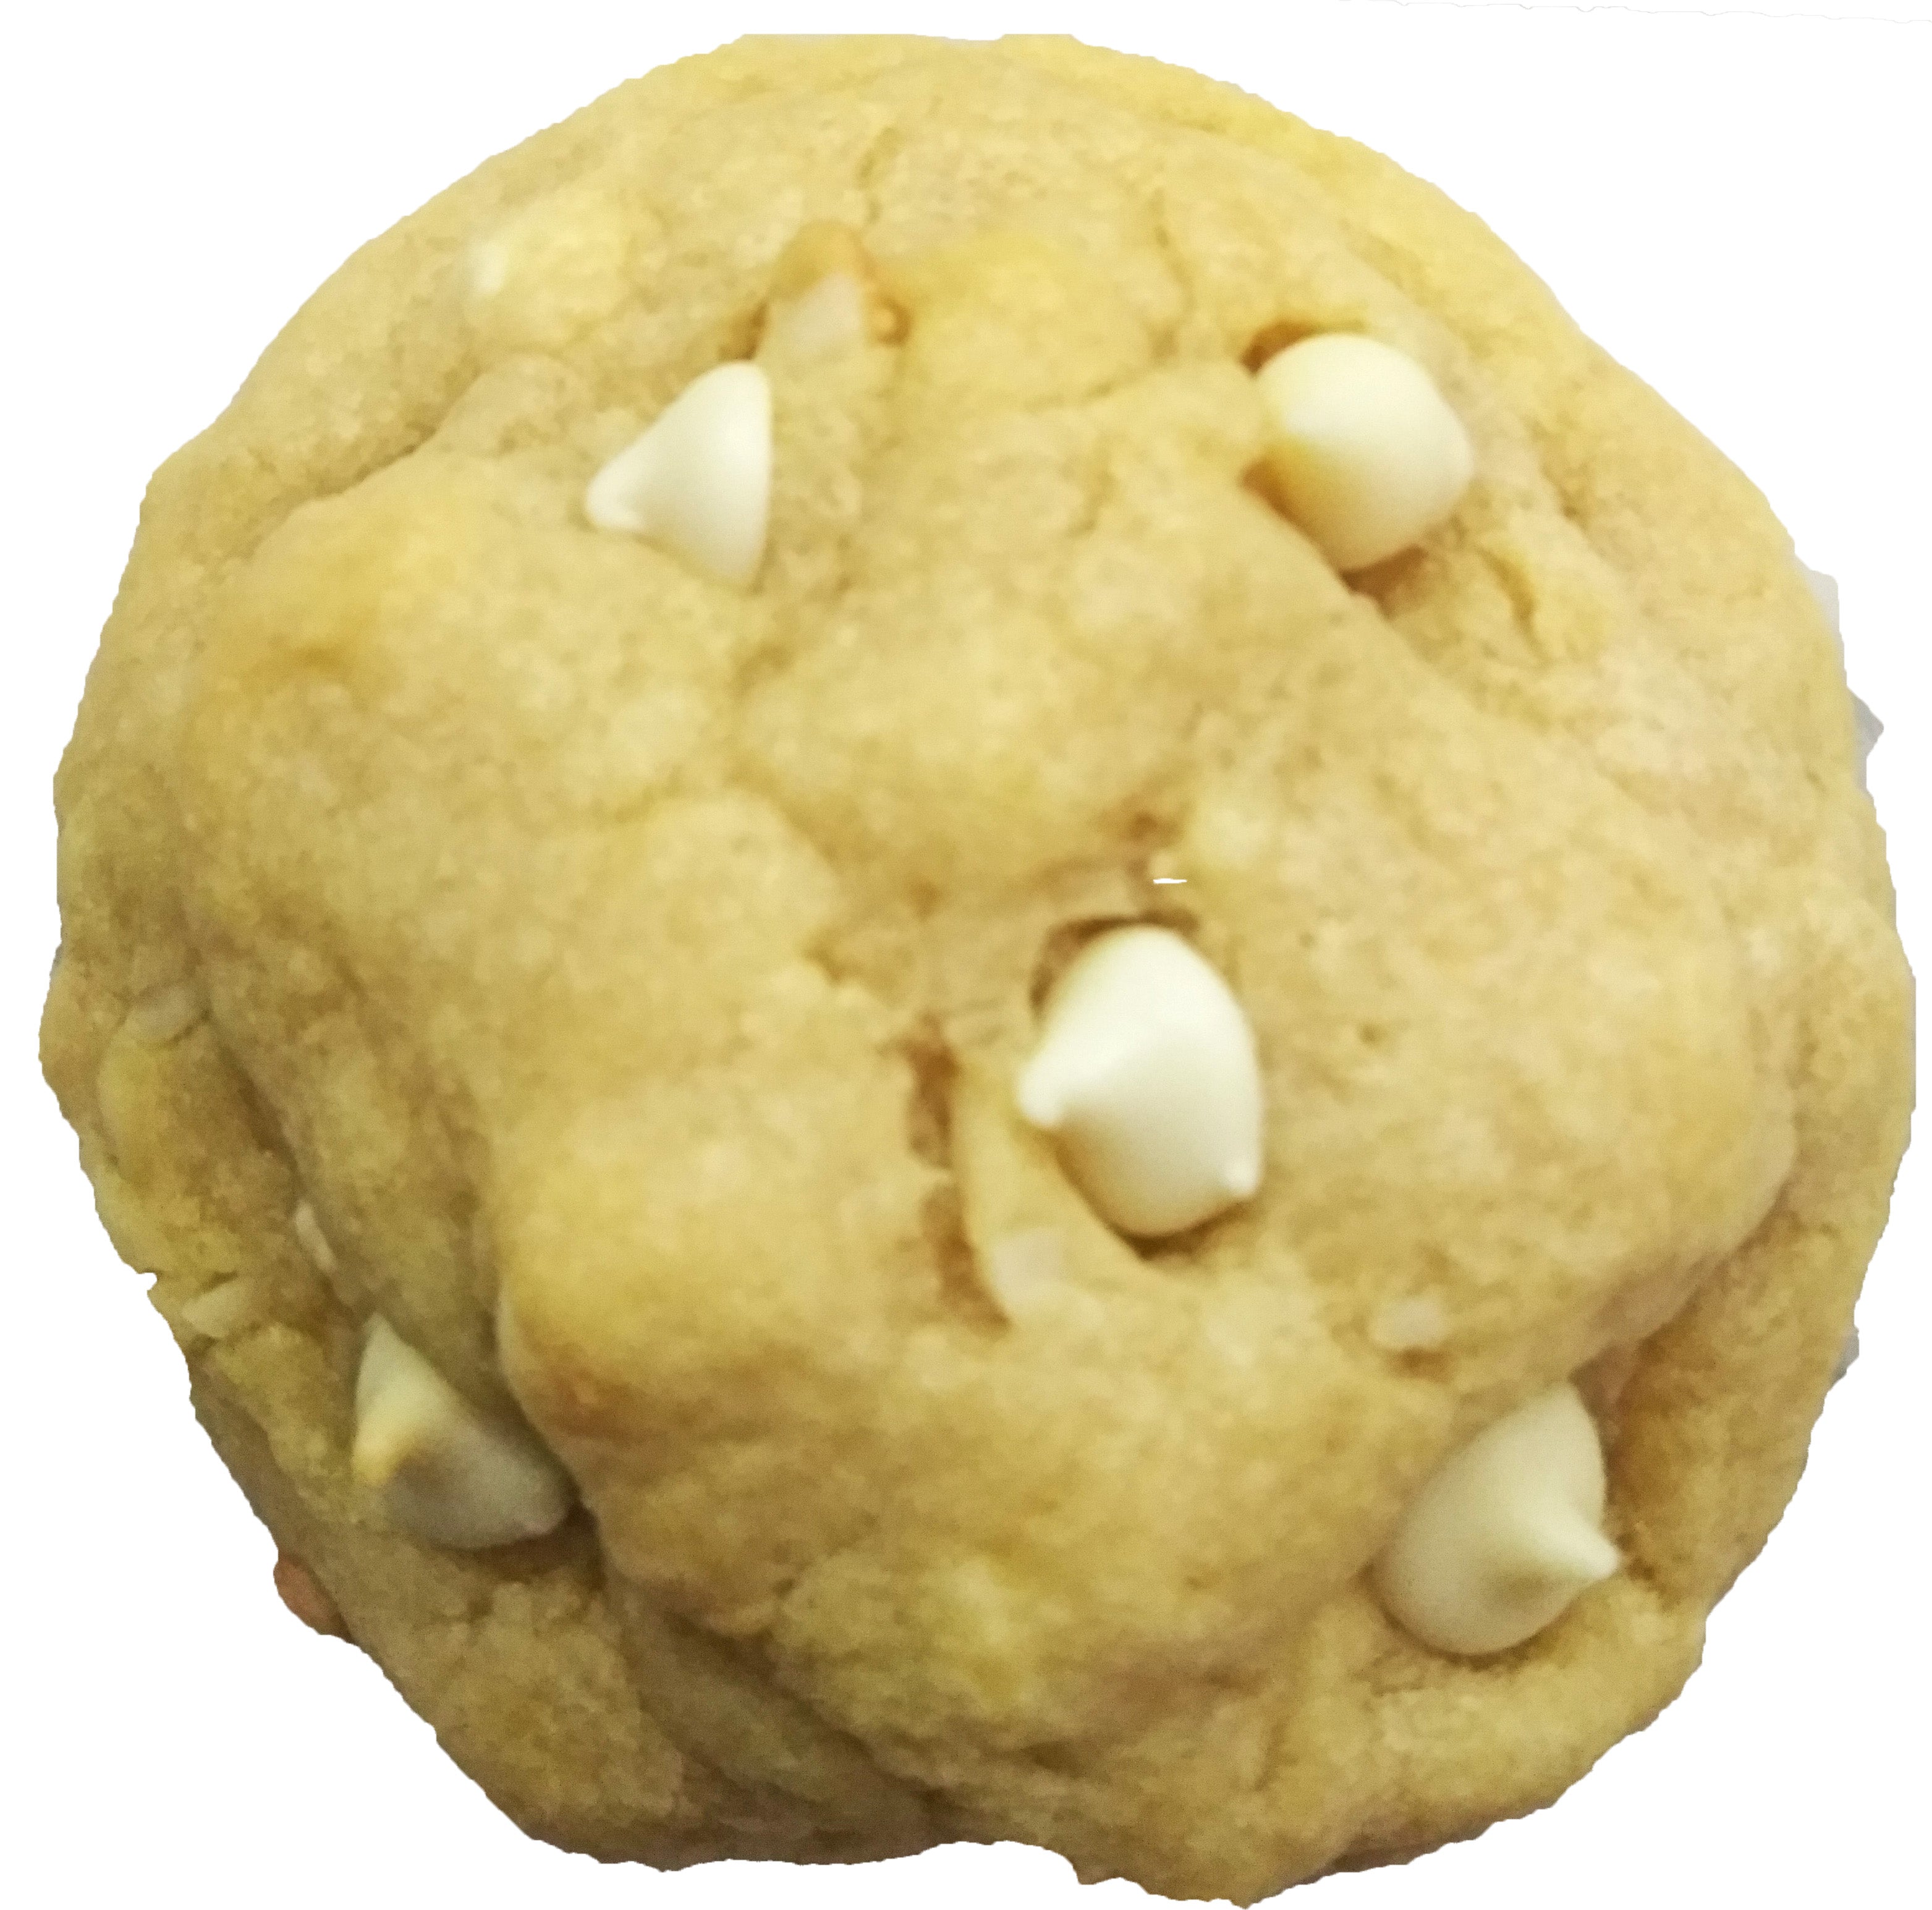 White Chocolate Chip Macadamia Nut Cookie